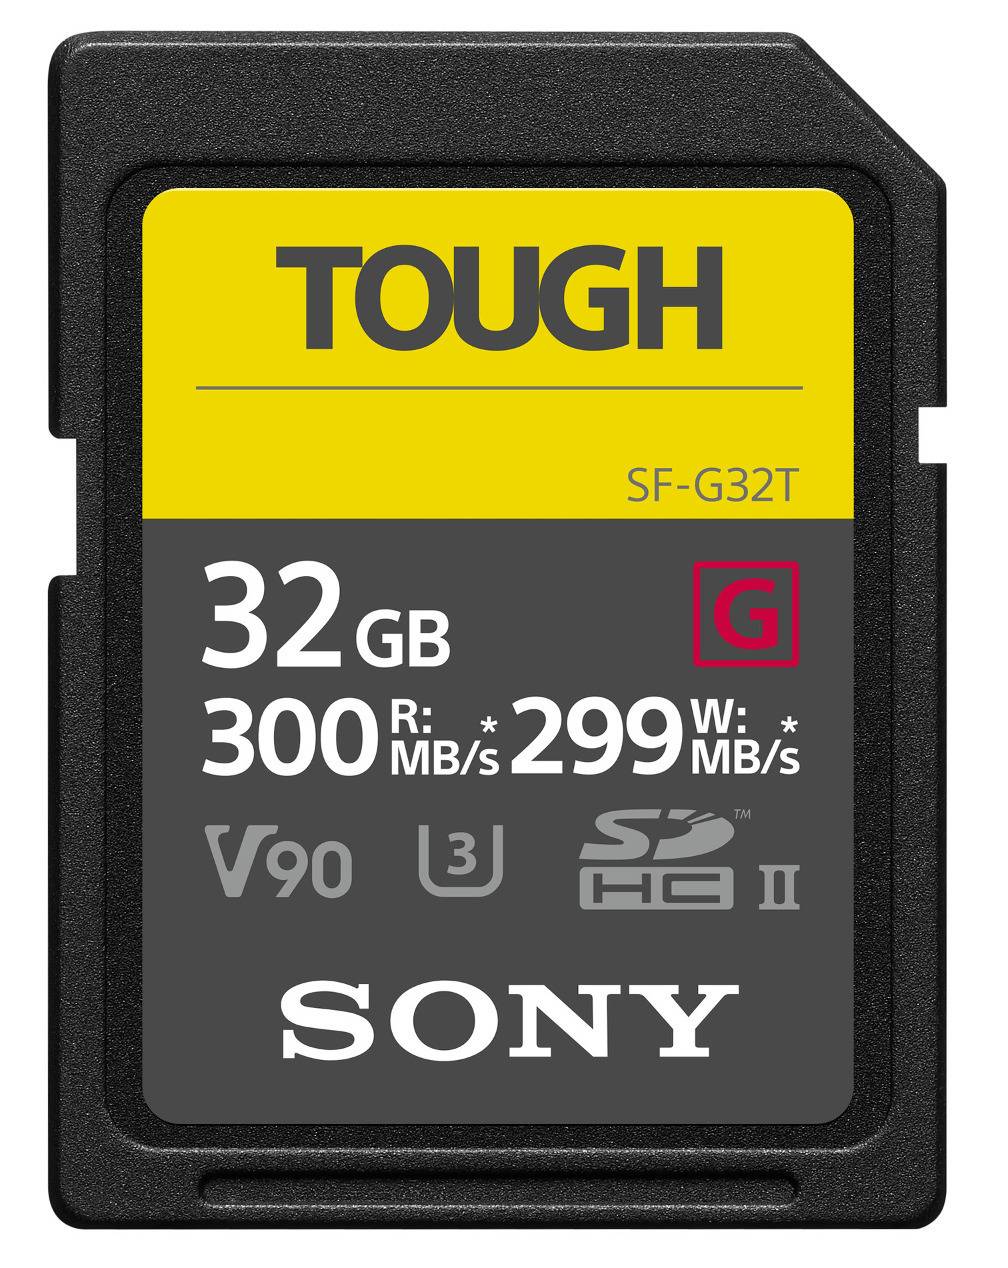 Sony 32GB UHS-II Tough G-Series SD Card